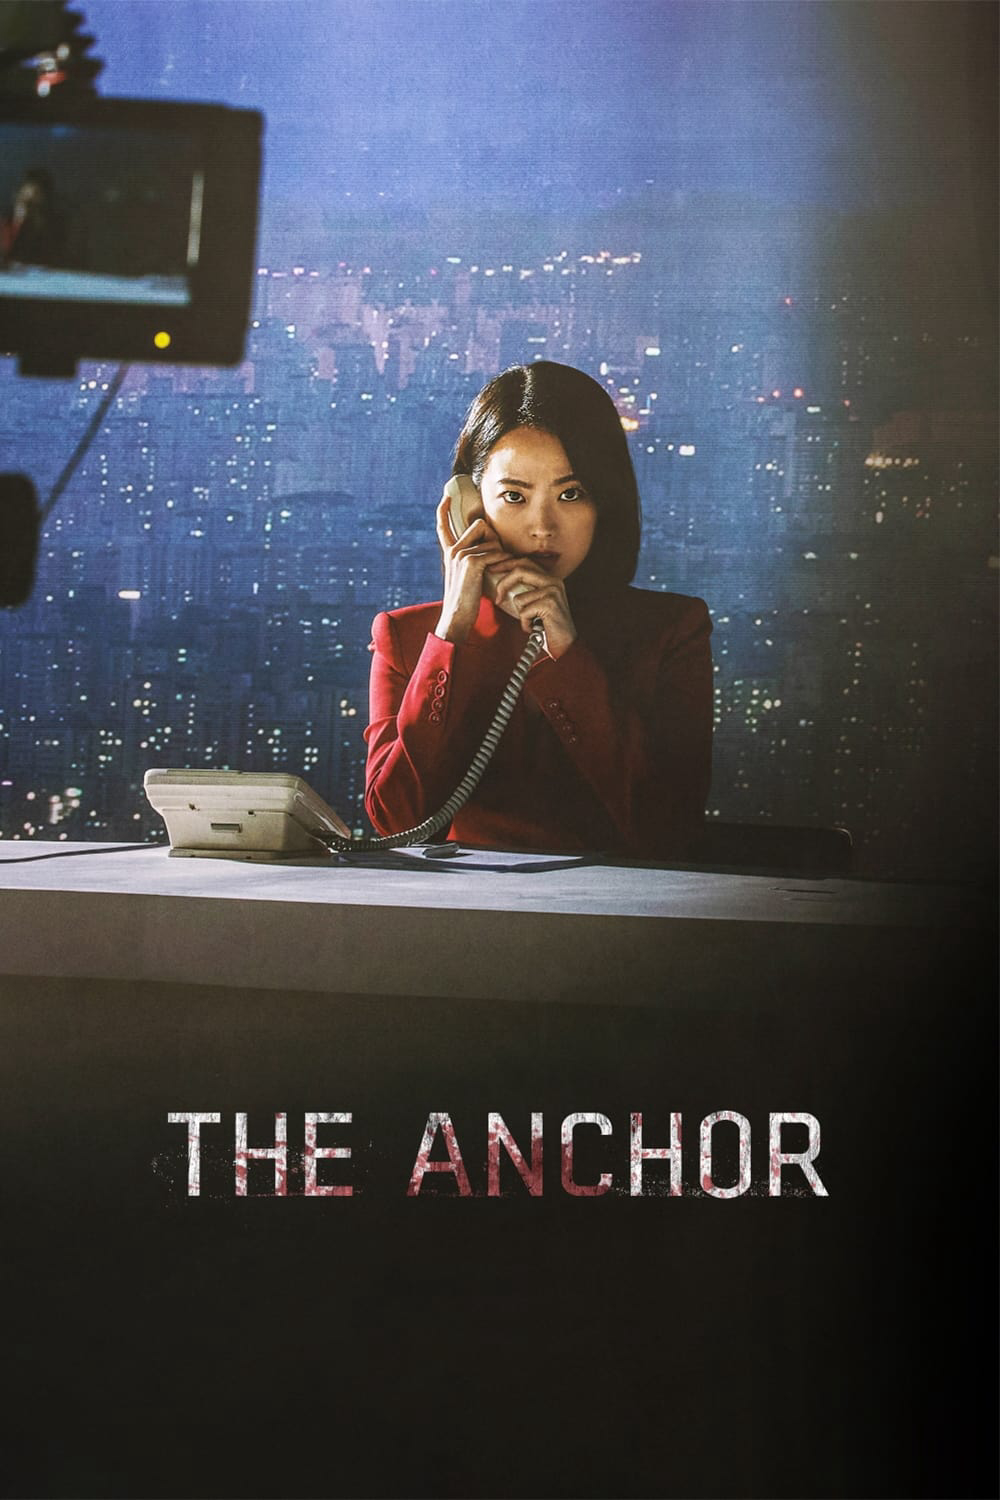 Banner Phim Bản Tin Chết (The Anchor)